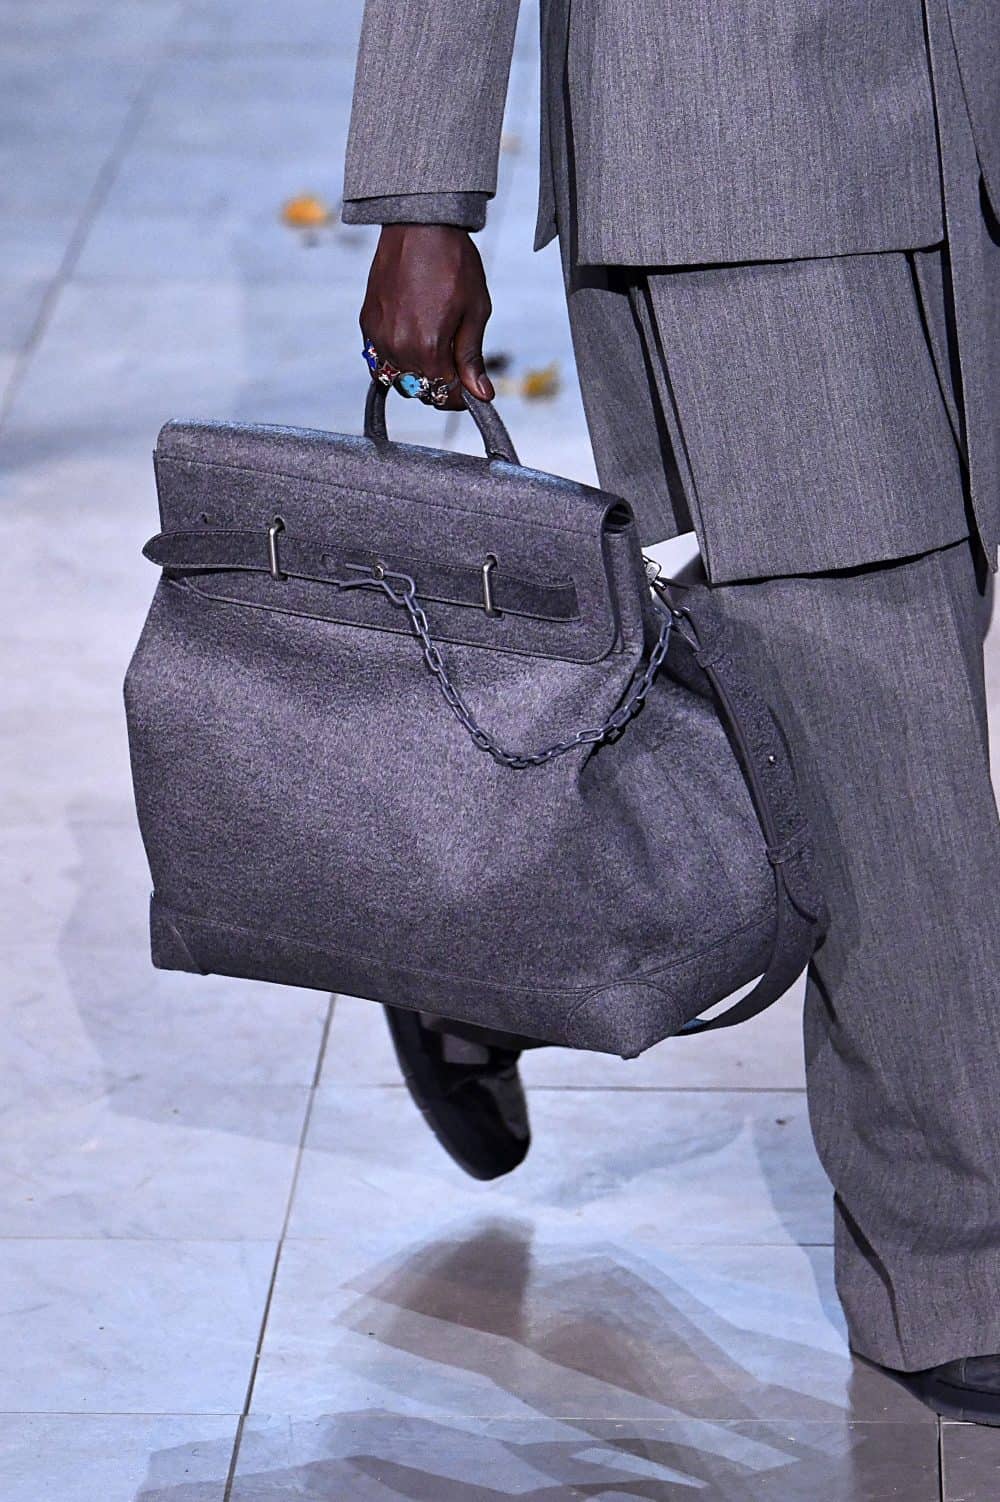 Preview Of Louis Vuitton Men's Fall/Winter 2019 Bag Collection